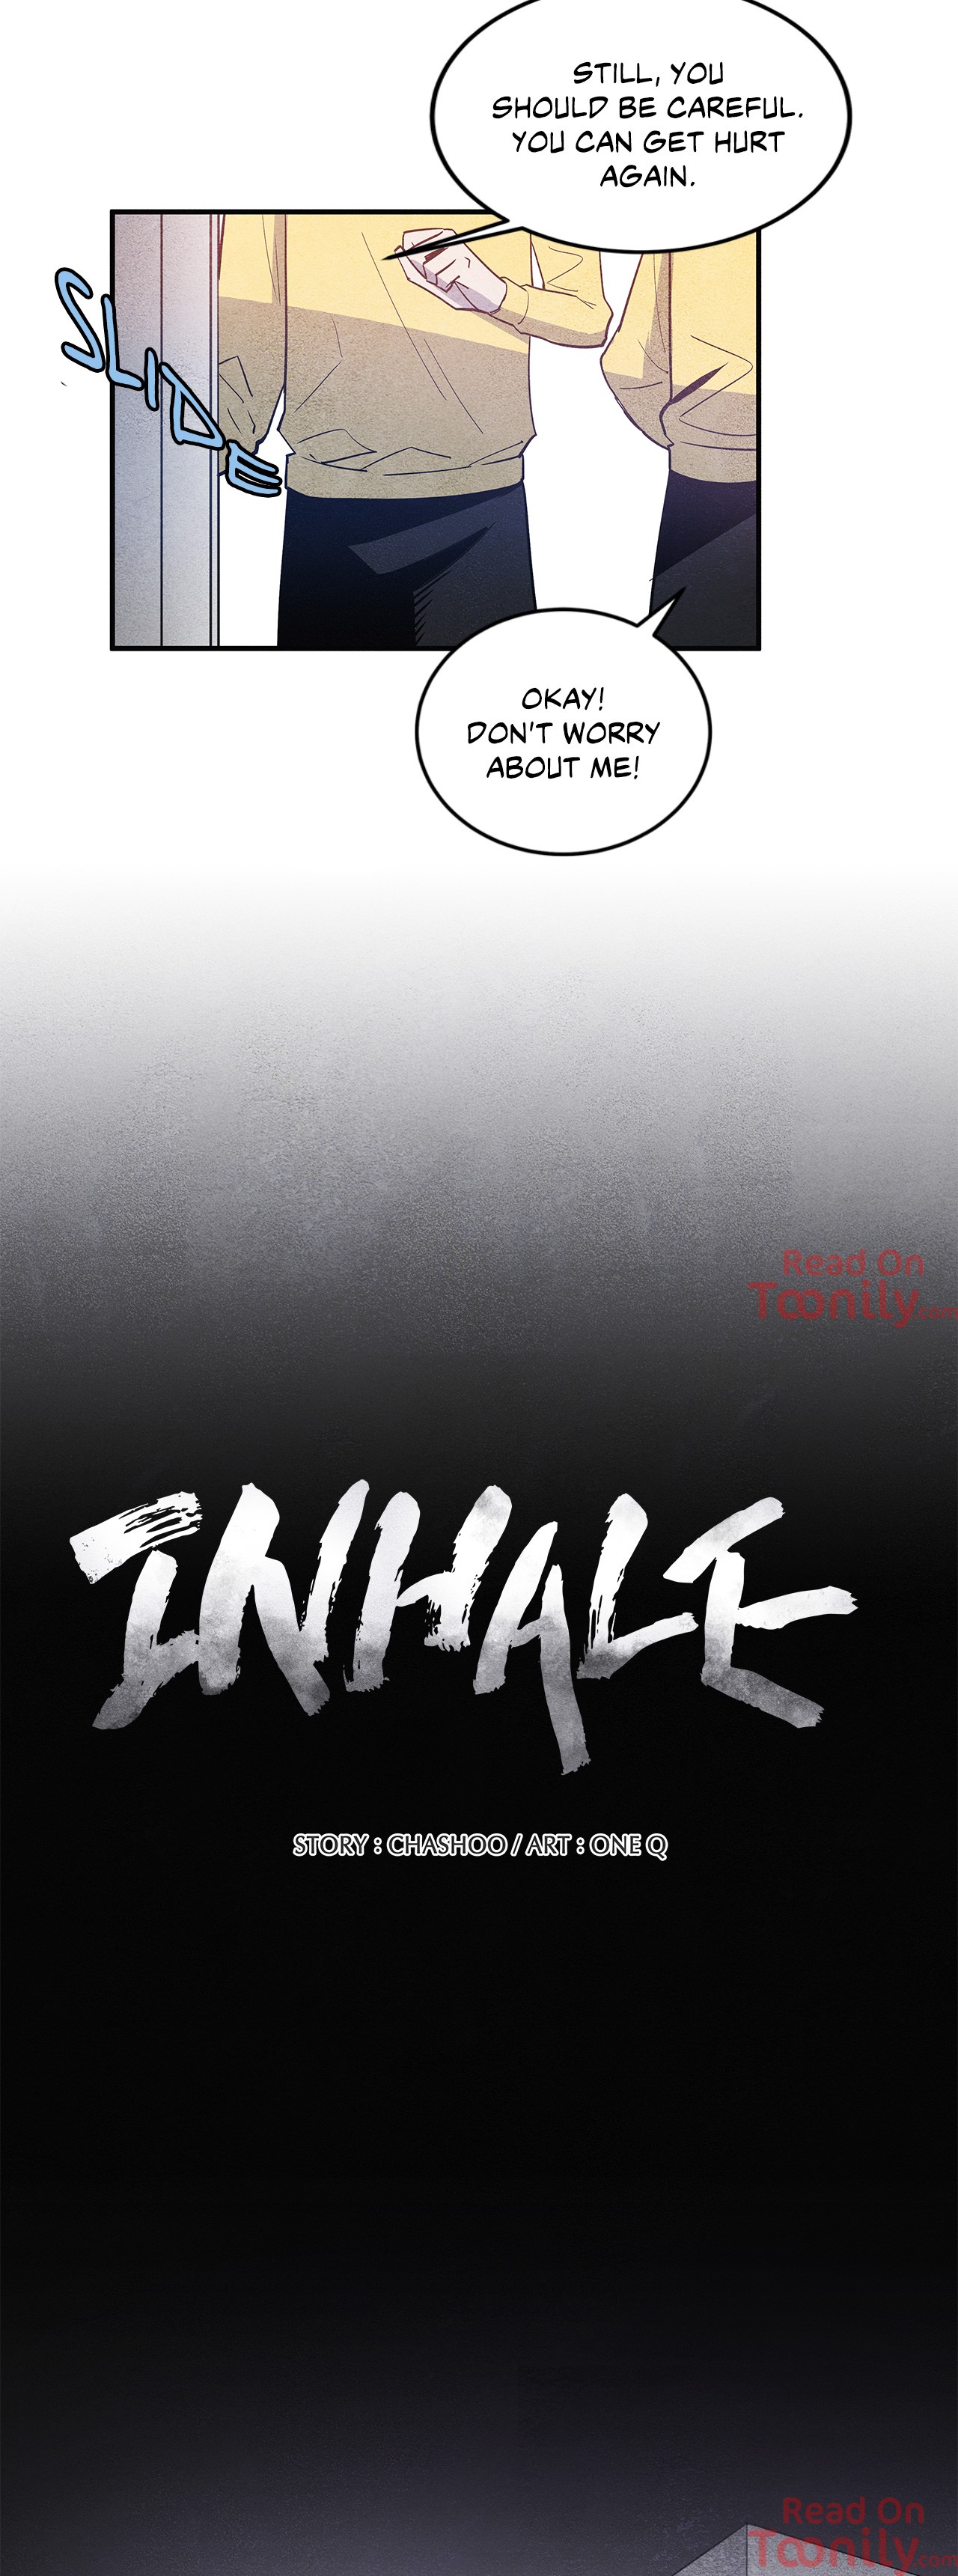 Inhale image